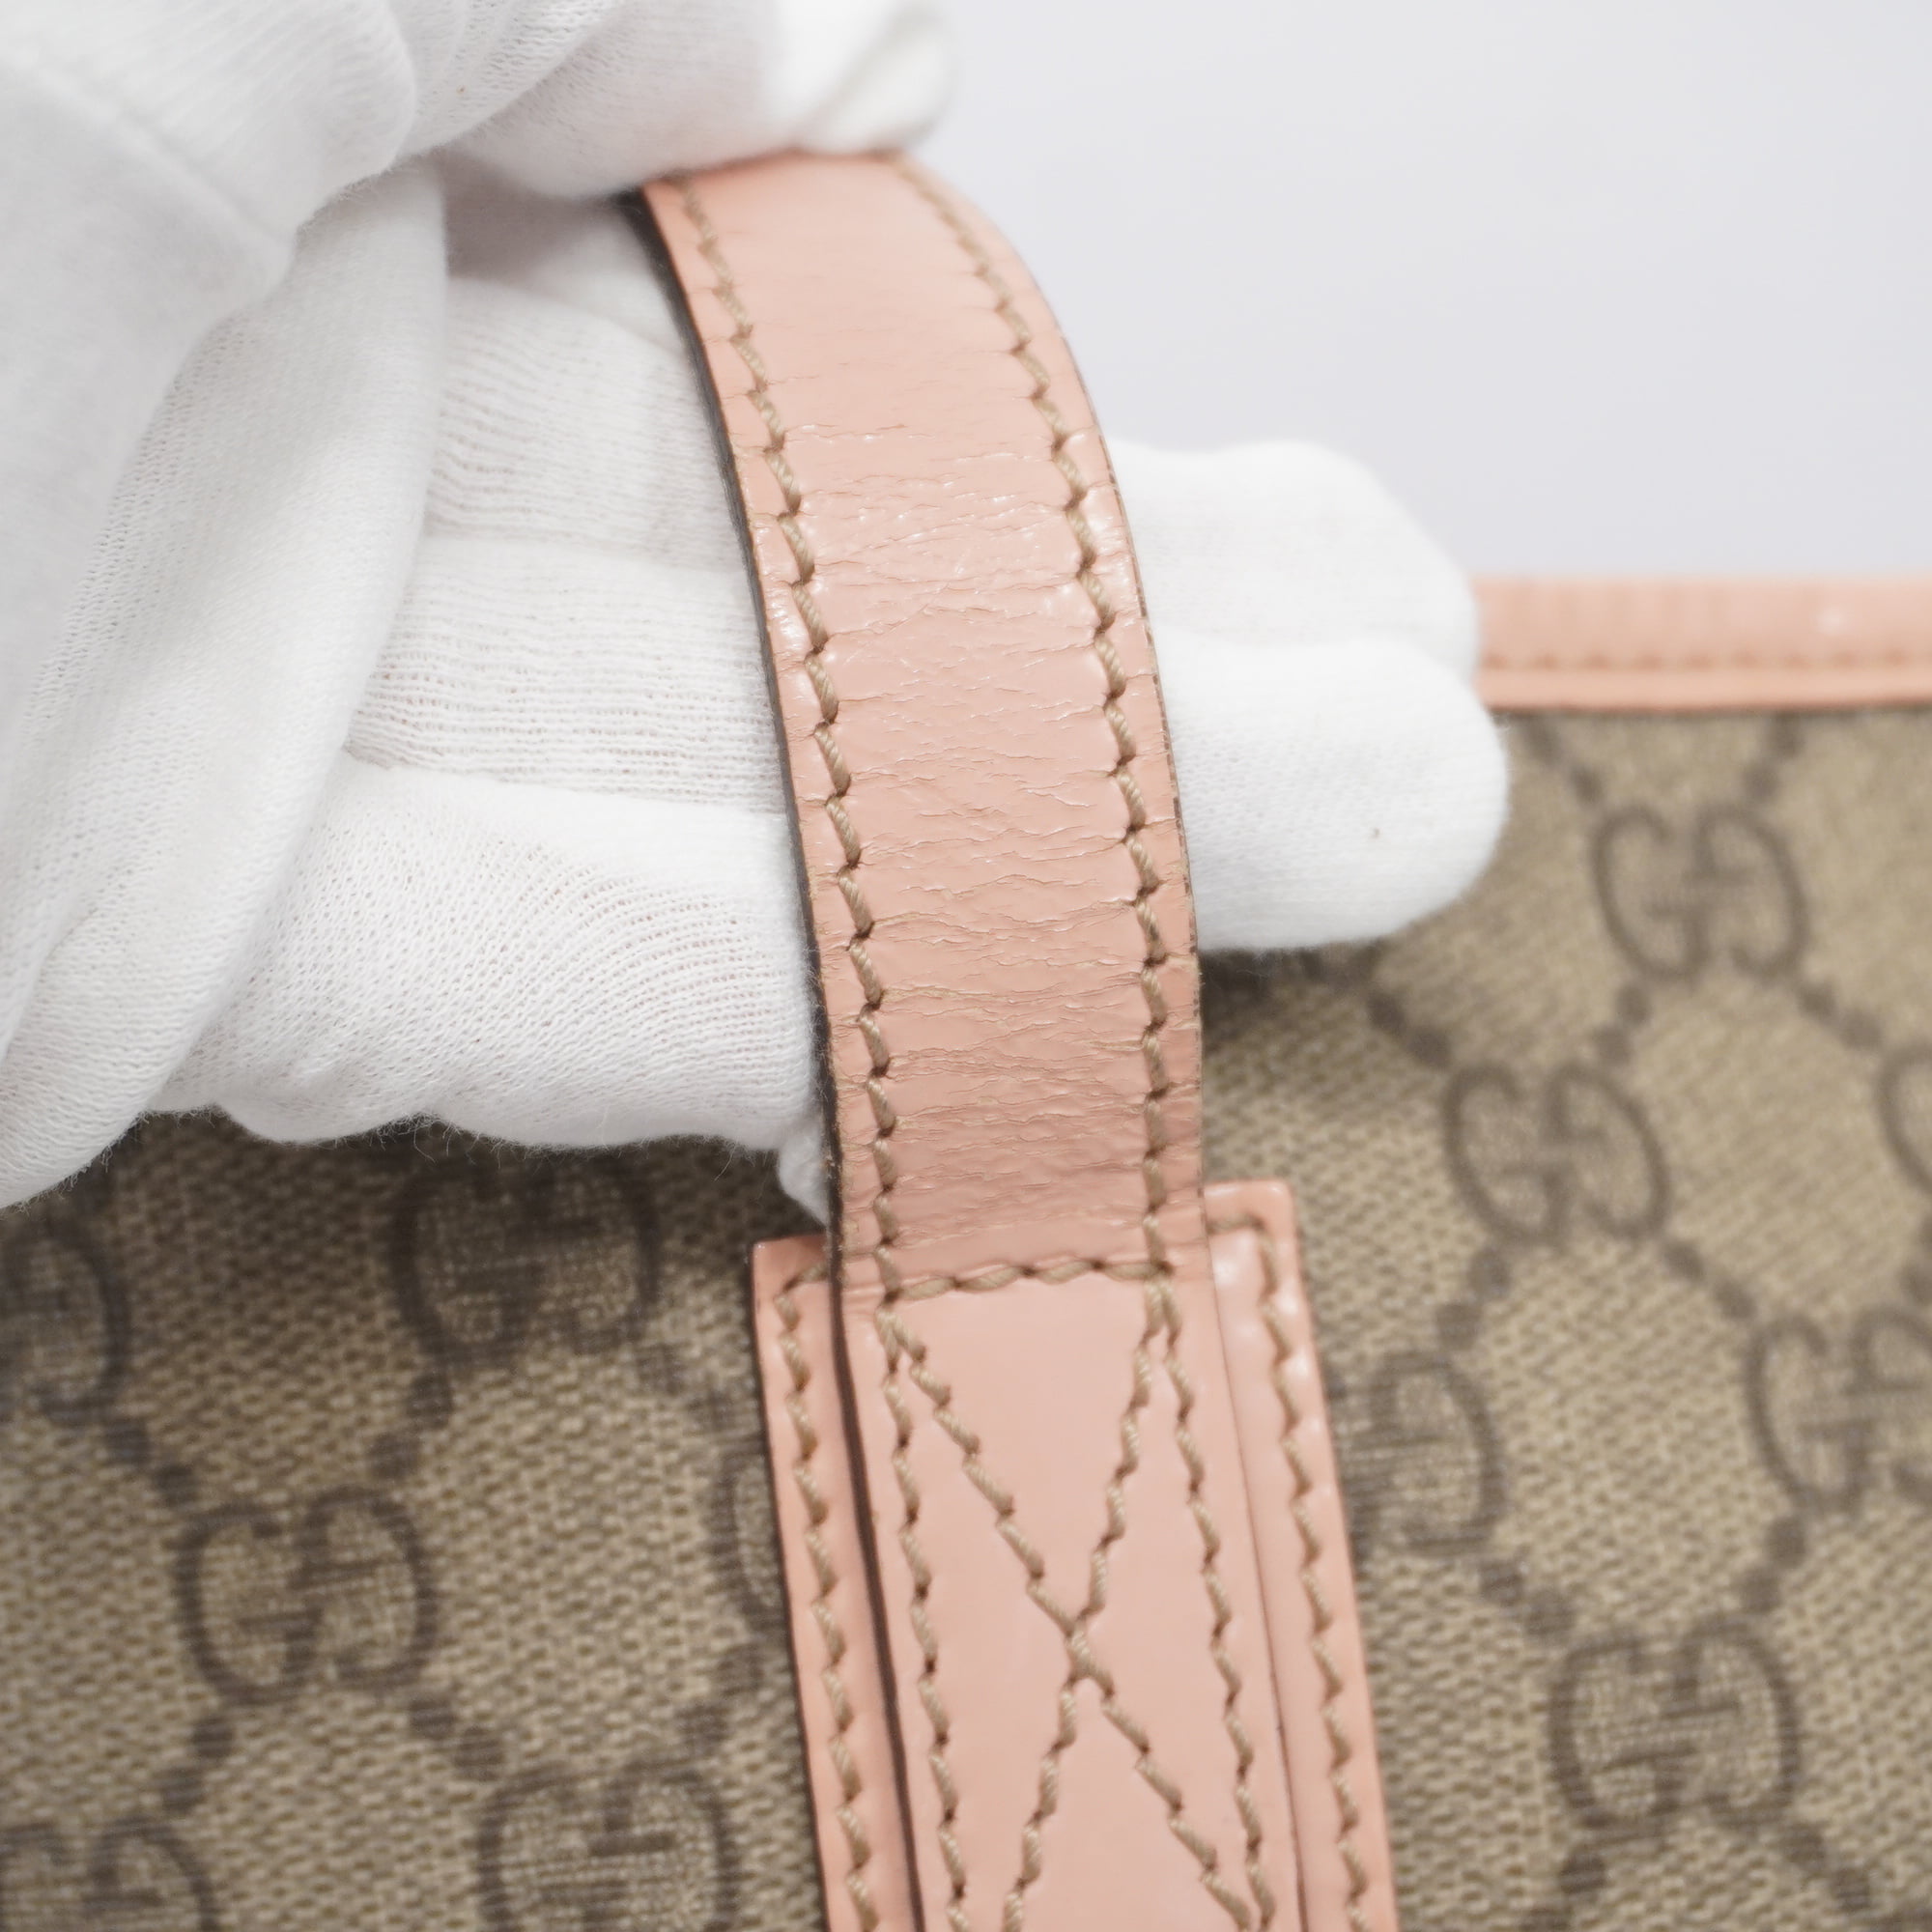 Used Auth Gucci Tote Bag 211137 Women's GG Supreme Handbag,Tote Bag  Beige,Pink 